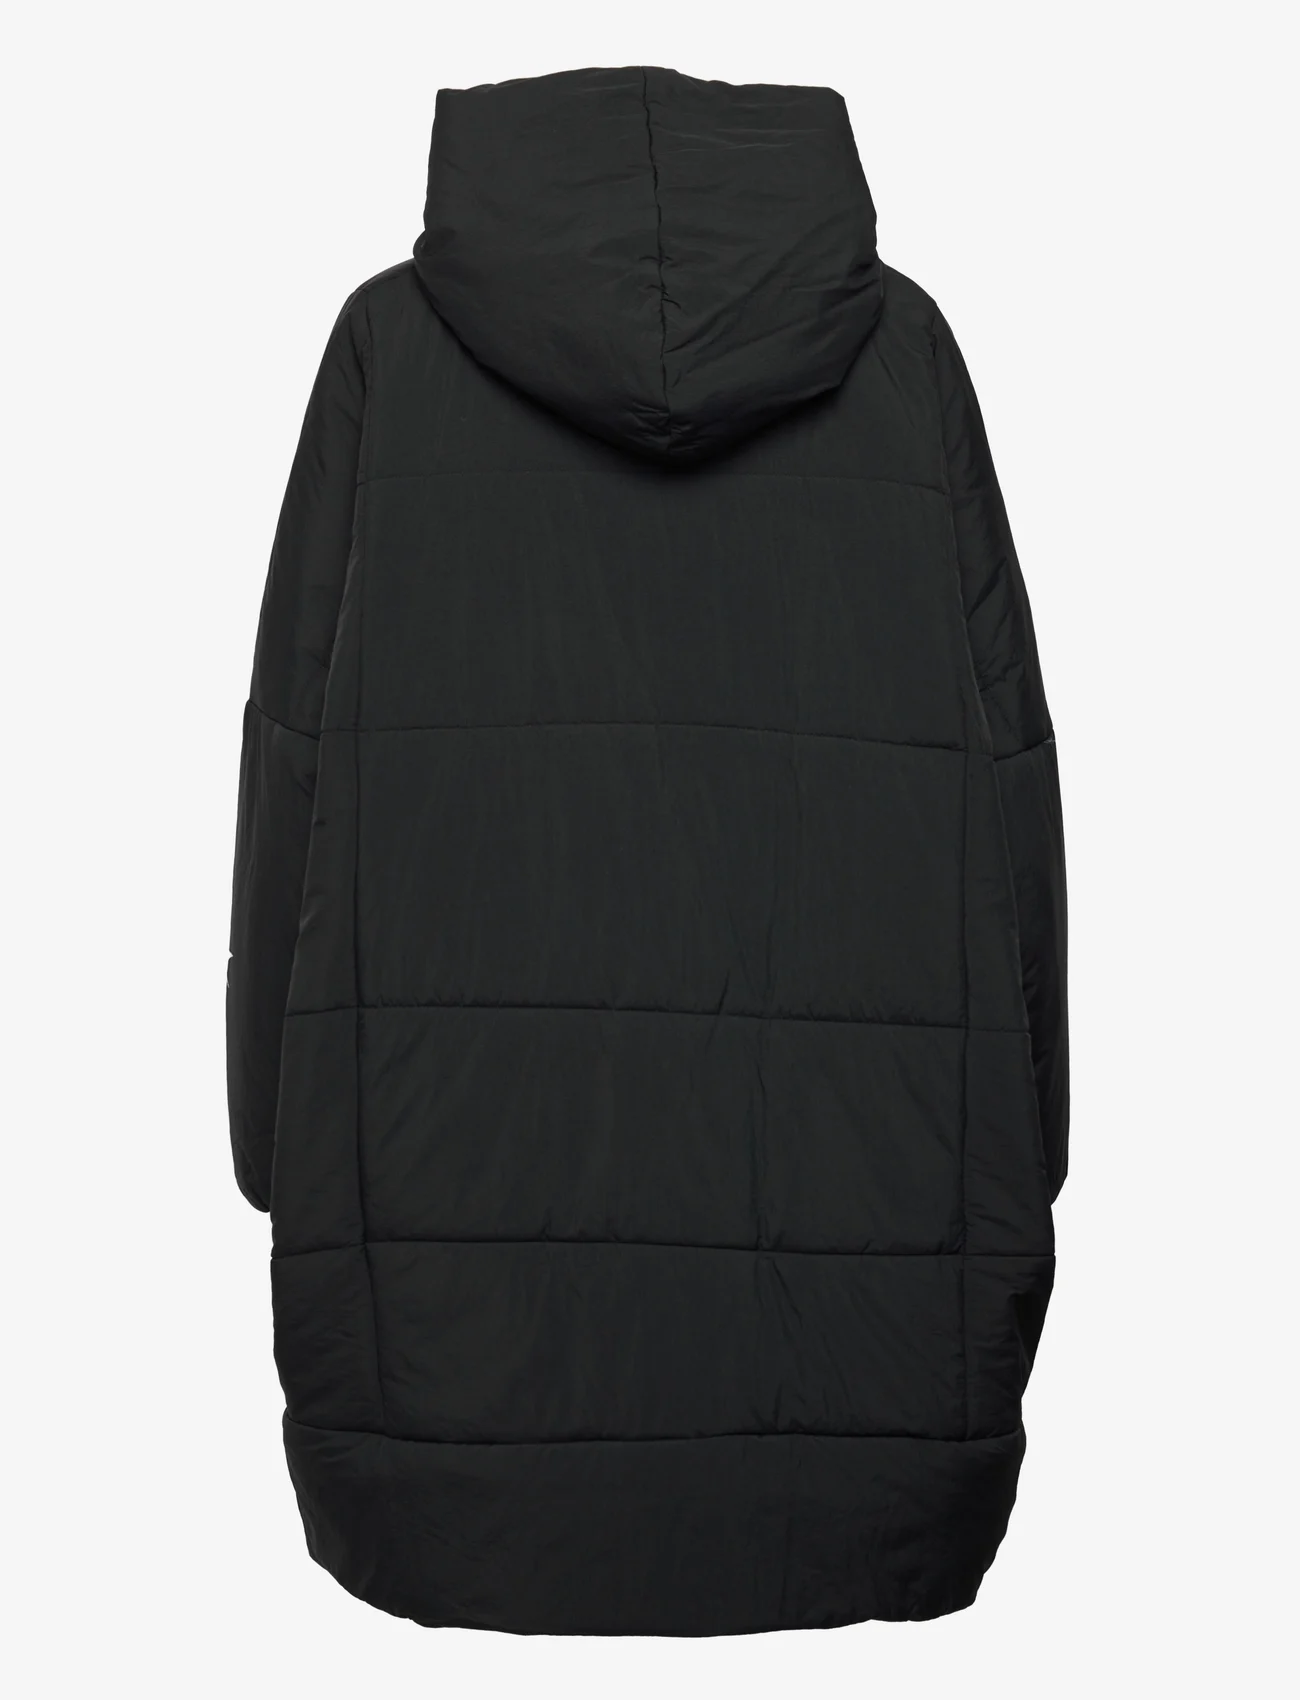 Reebok Performance - Studio Padded Long Jacket - padded coats - black - 1